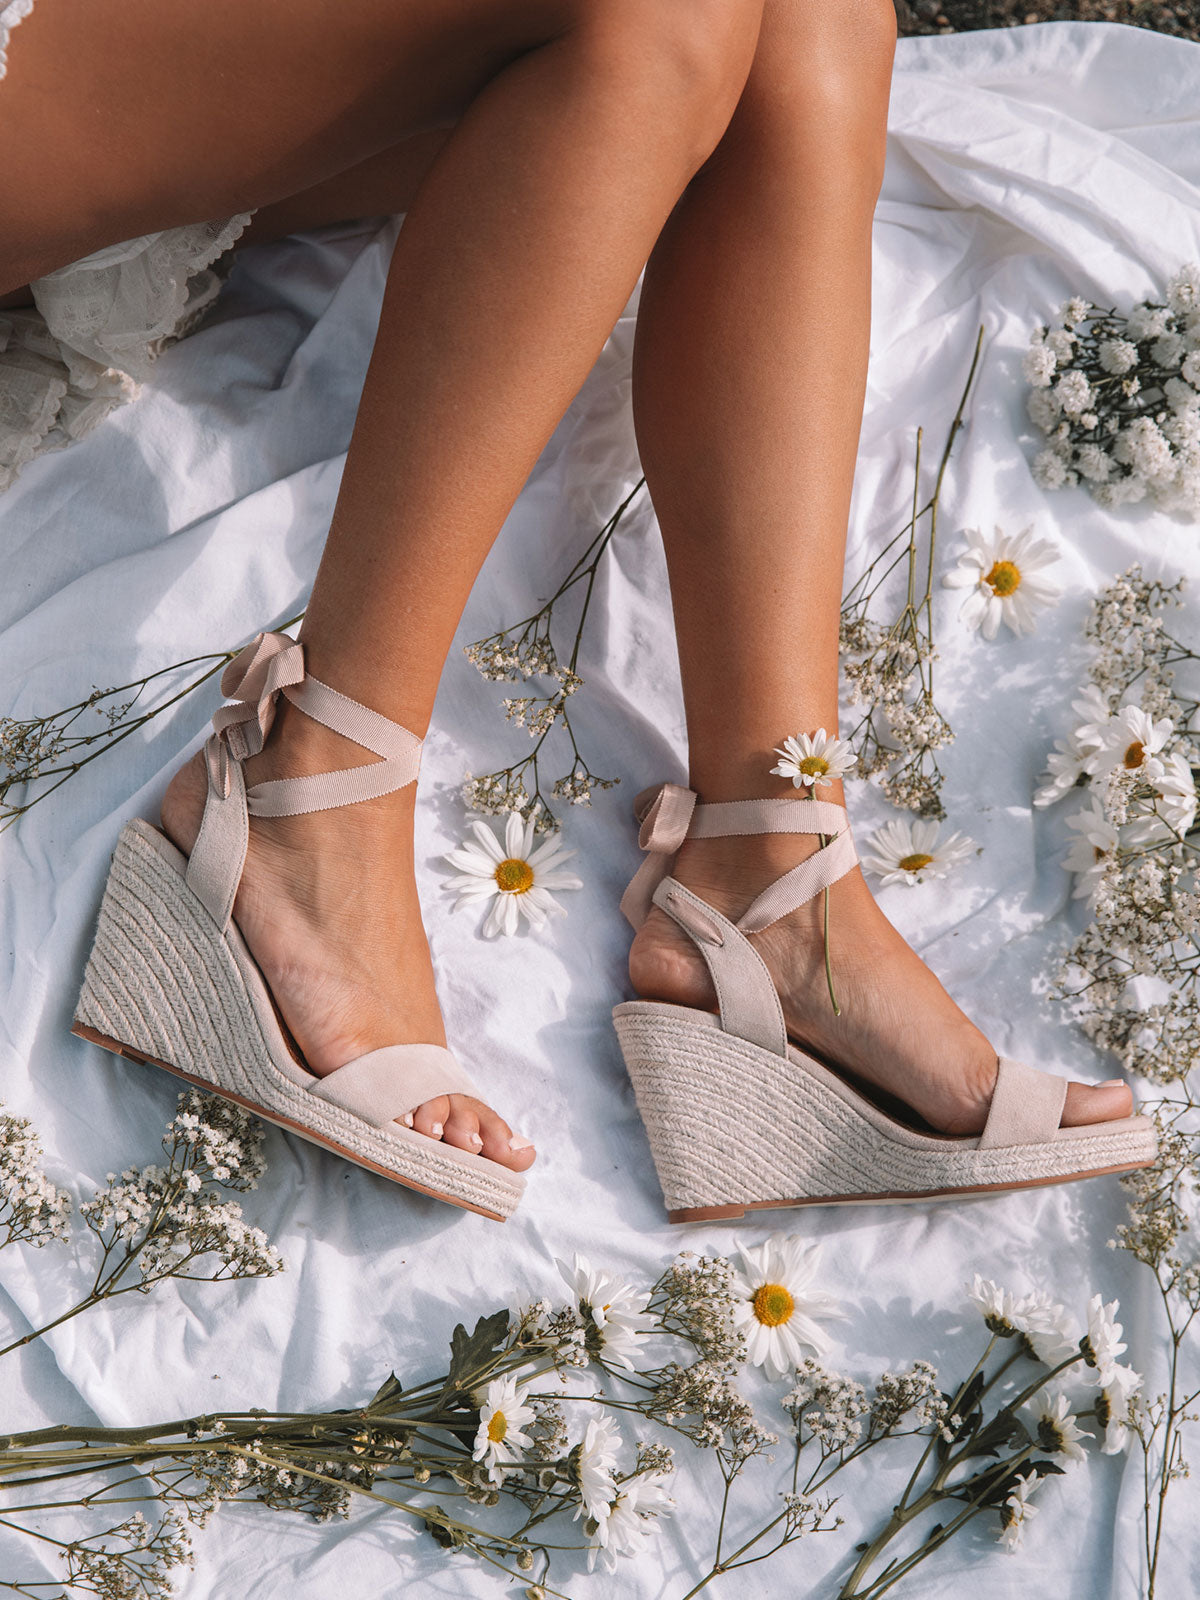 bridal footwear online purchase